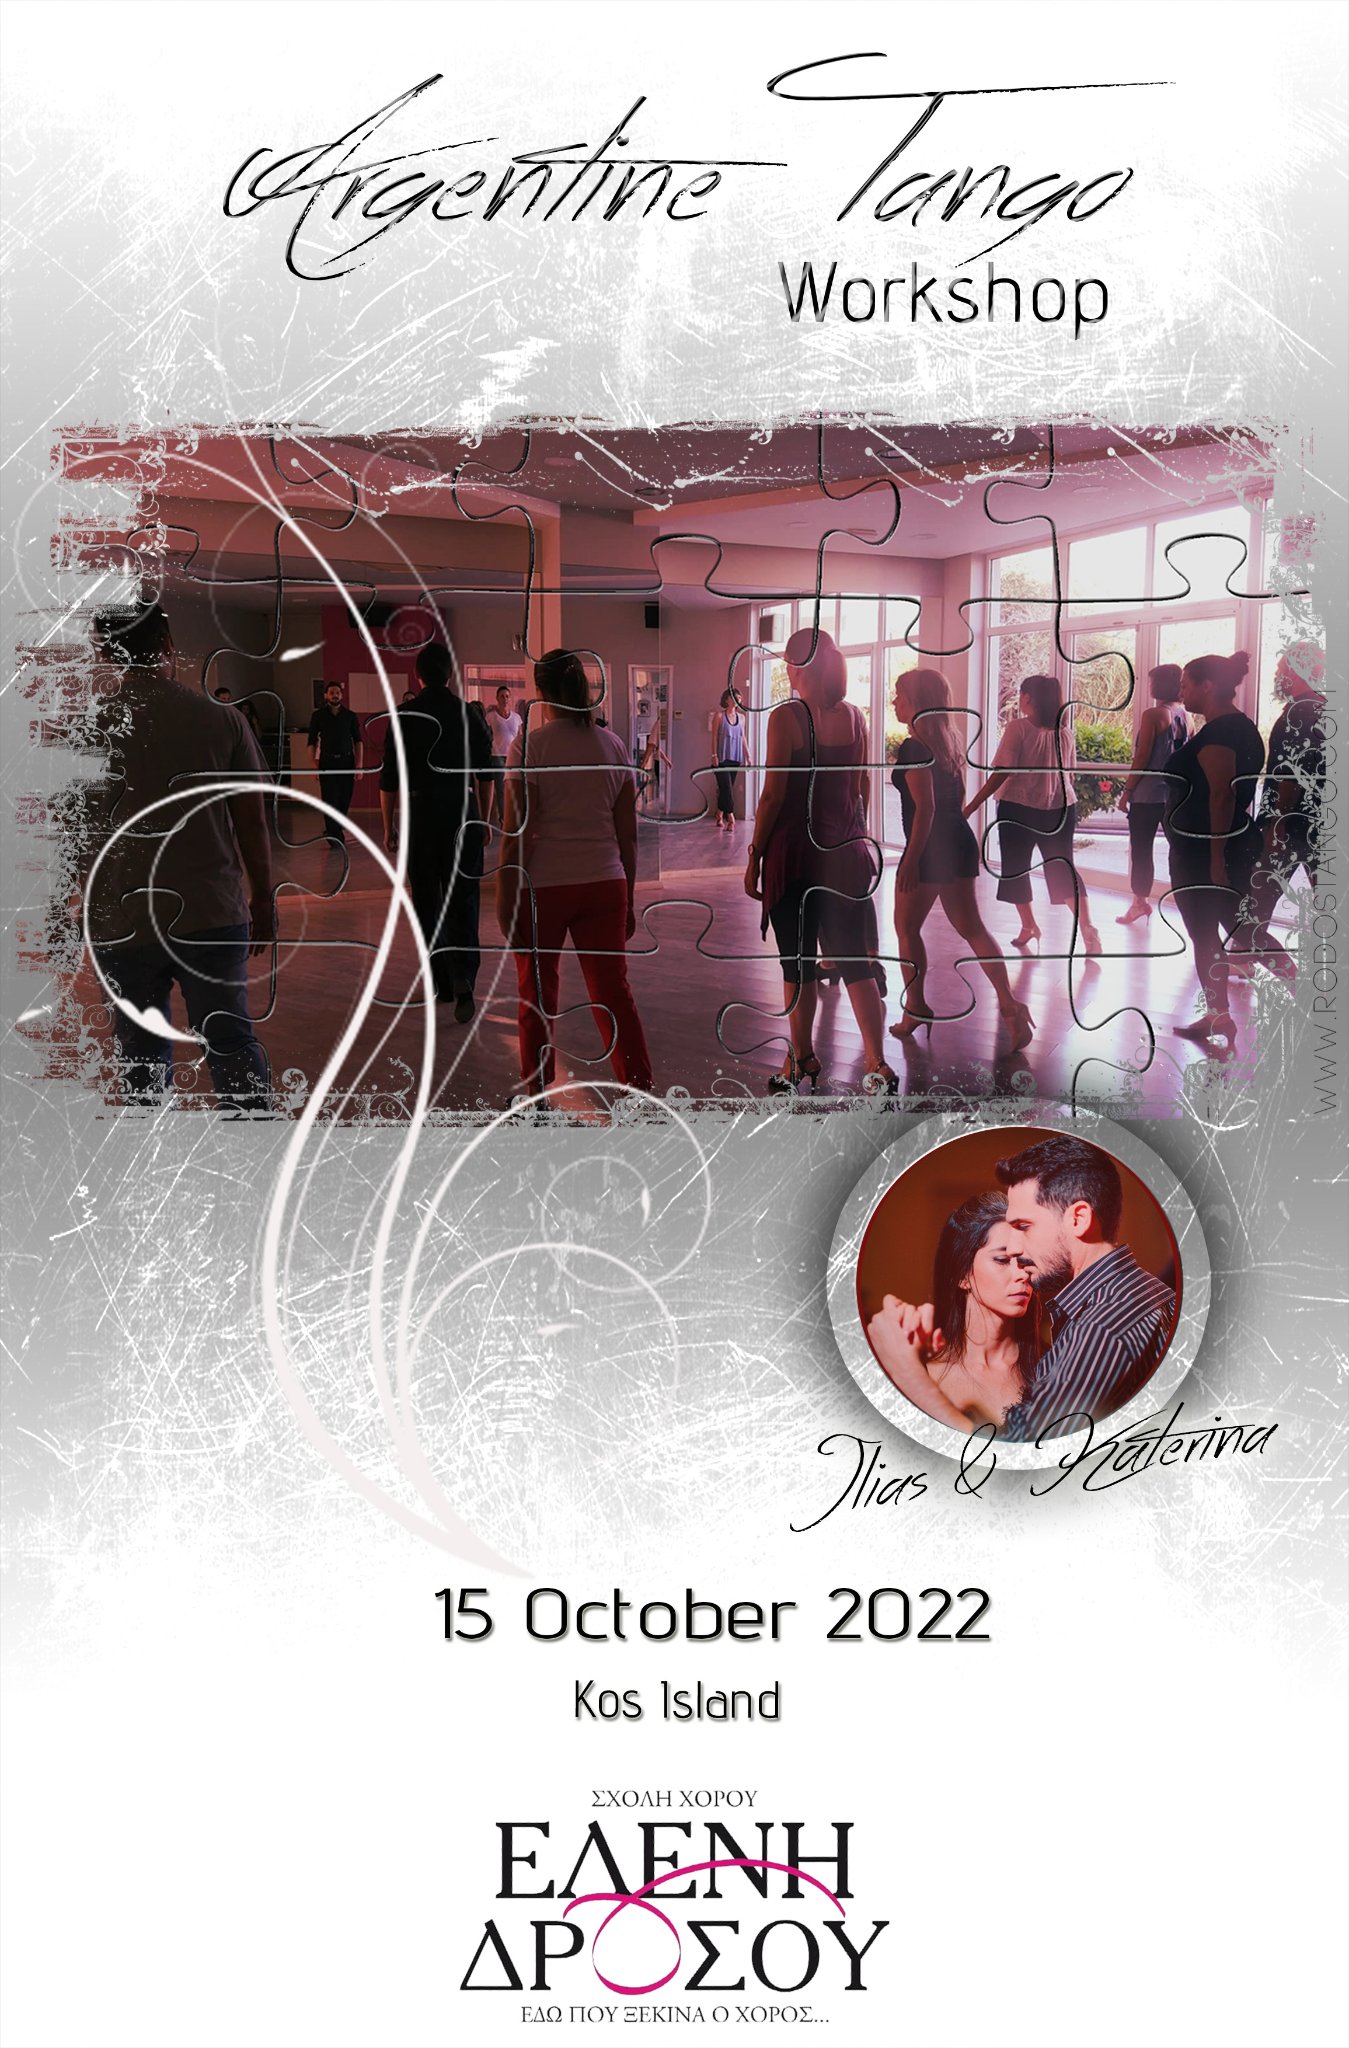 Mάθημα αργεντίνικου τάνγκο στο νησί της Κω - Σχολή Χορού Ελένη Δρόσου - Κως - 15 Οκτωβρίου  2022